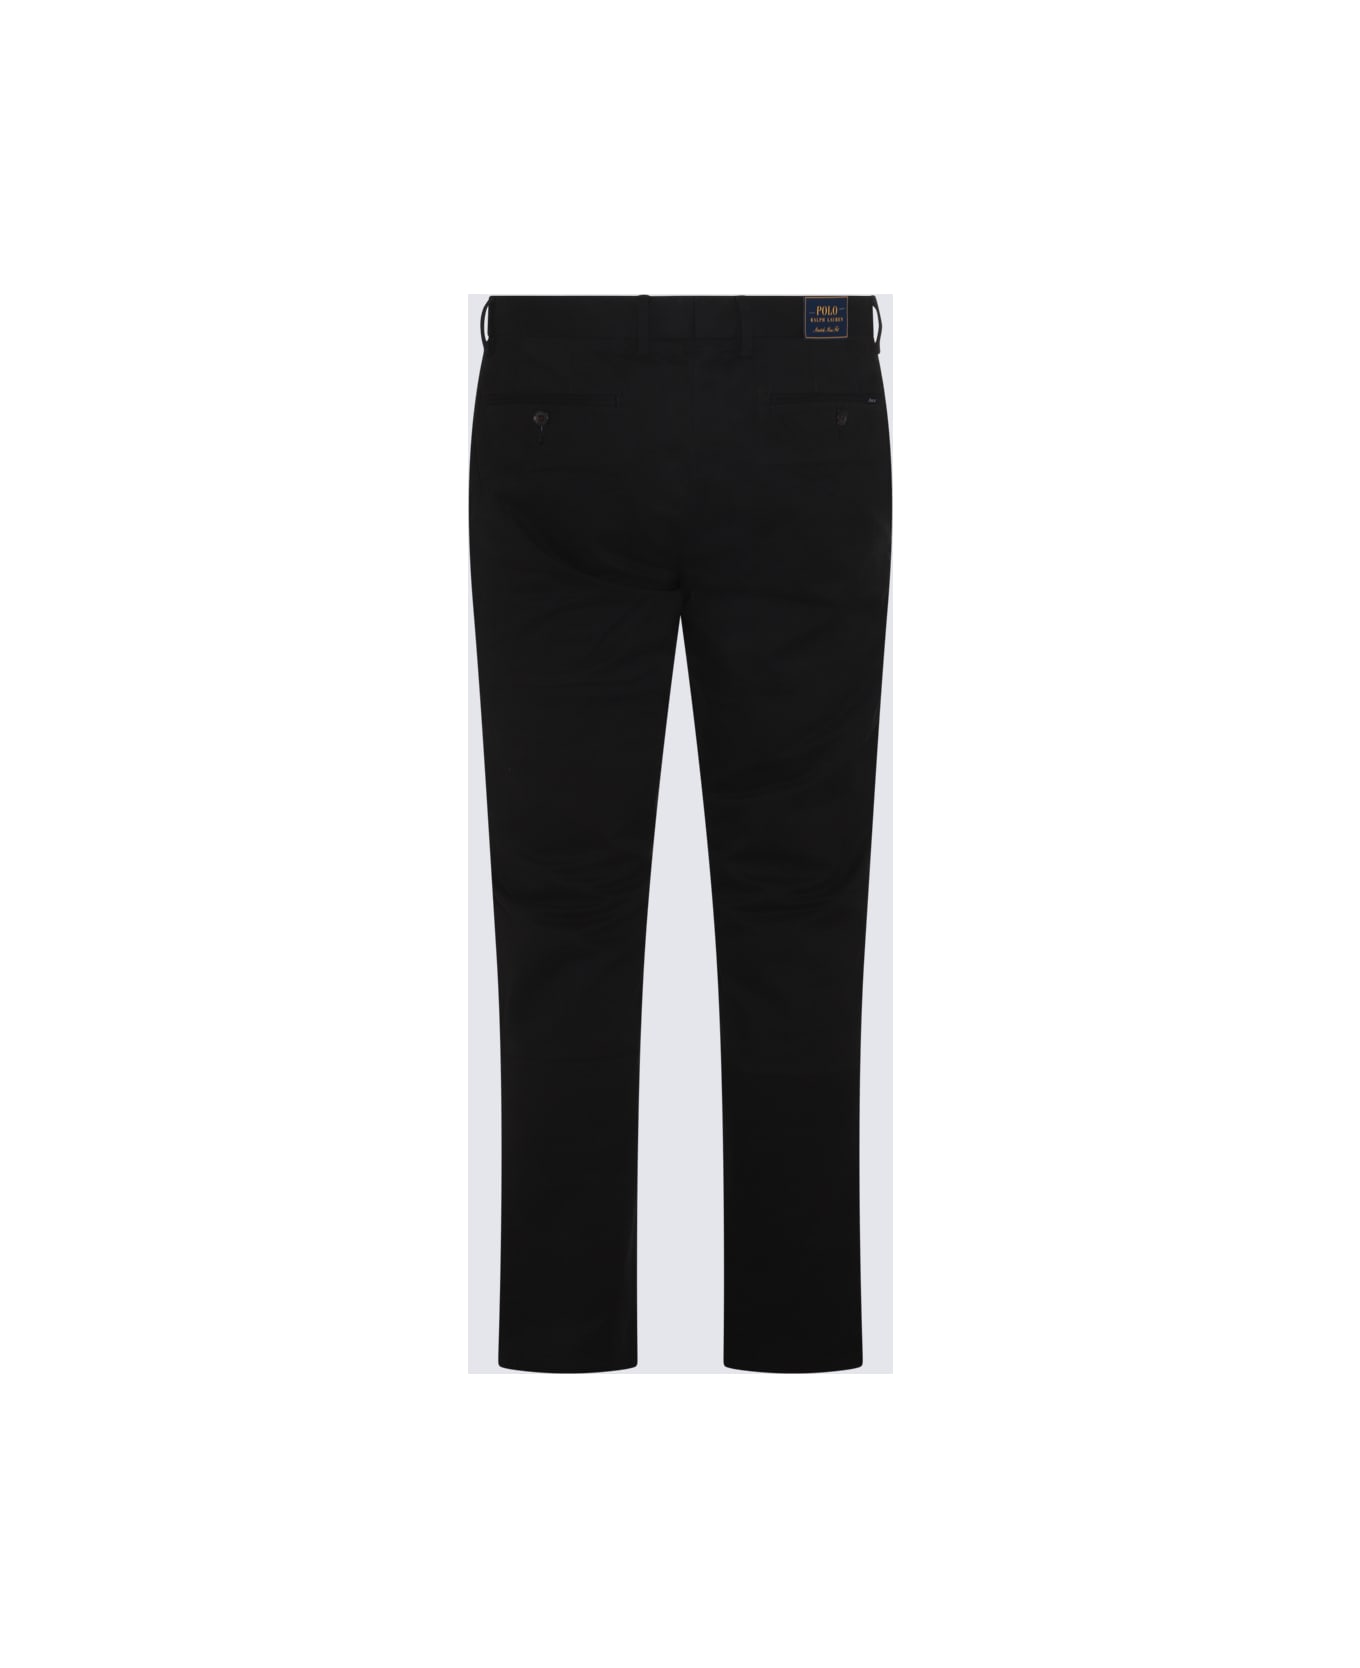 Polo Ralph Lauren Black Cotton Pants - POLO BLACK